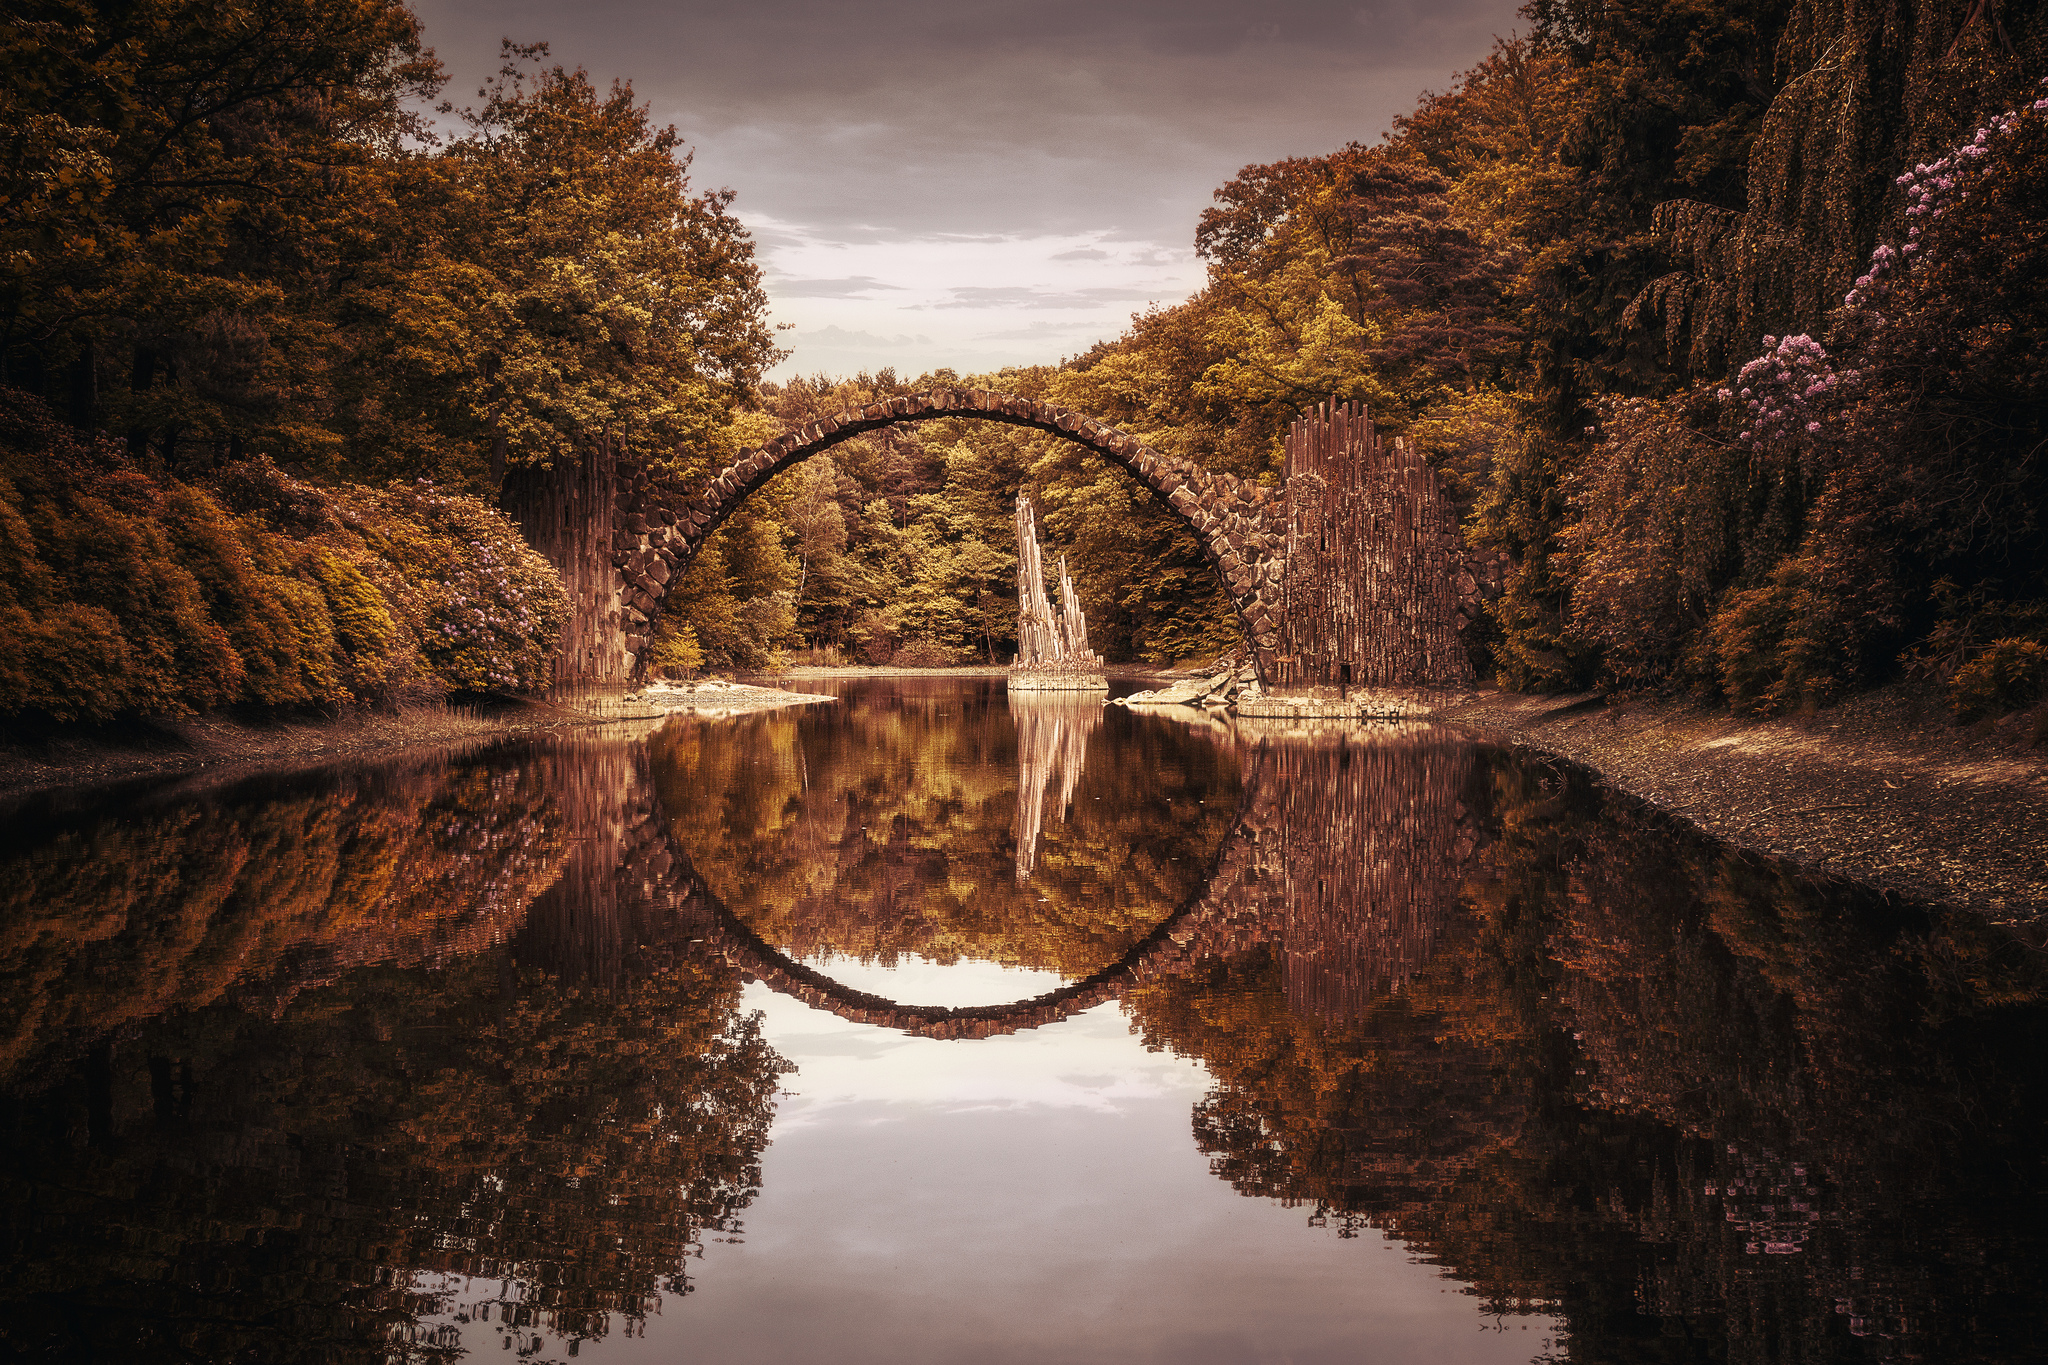 The devil's bridge, Rakotzbrücke, Germany by Paul Mehnert